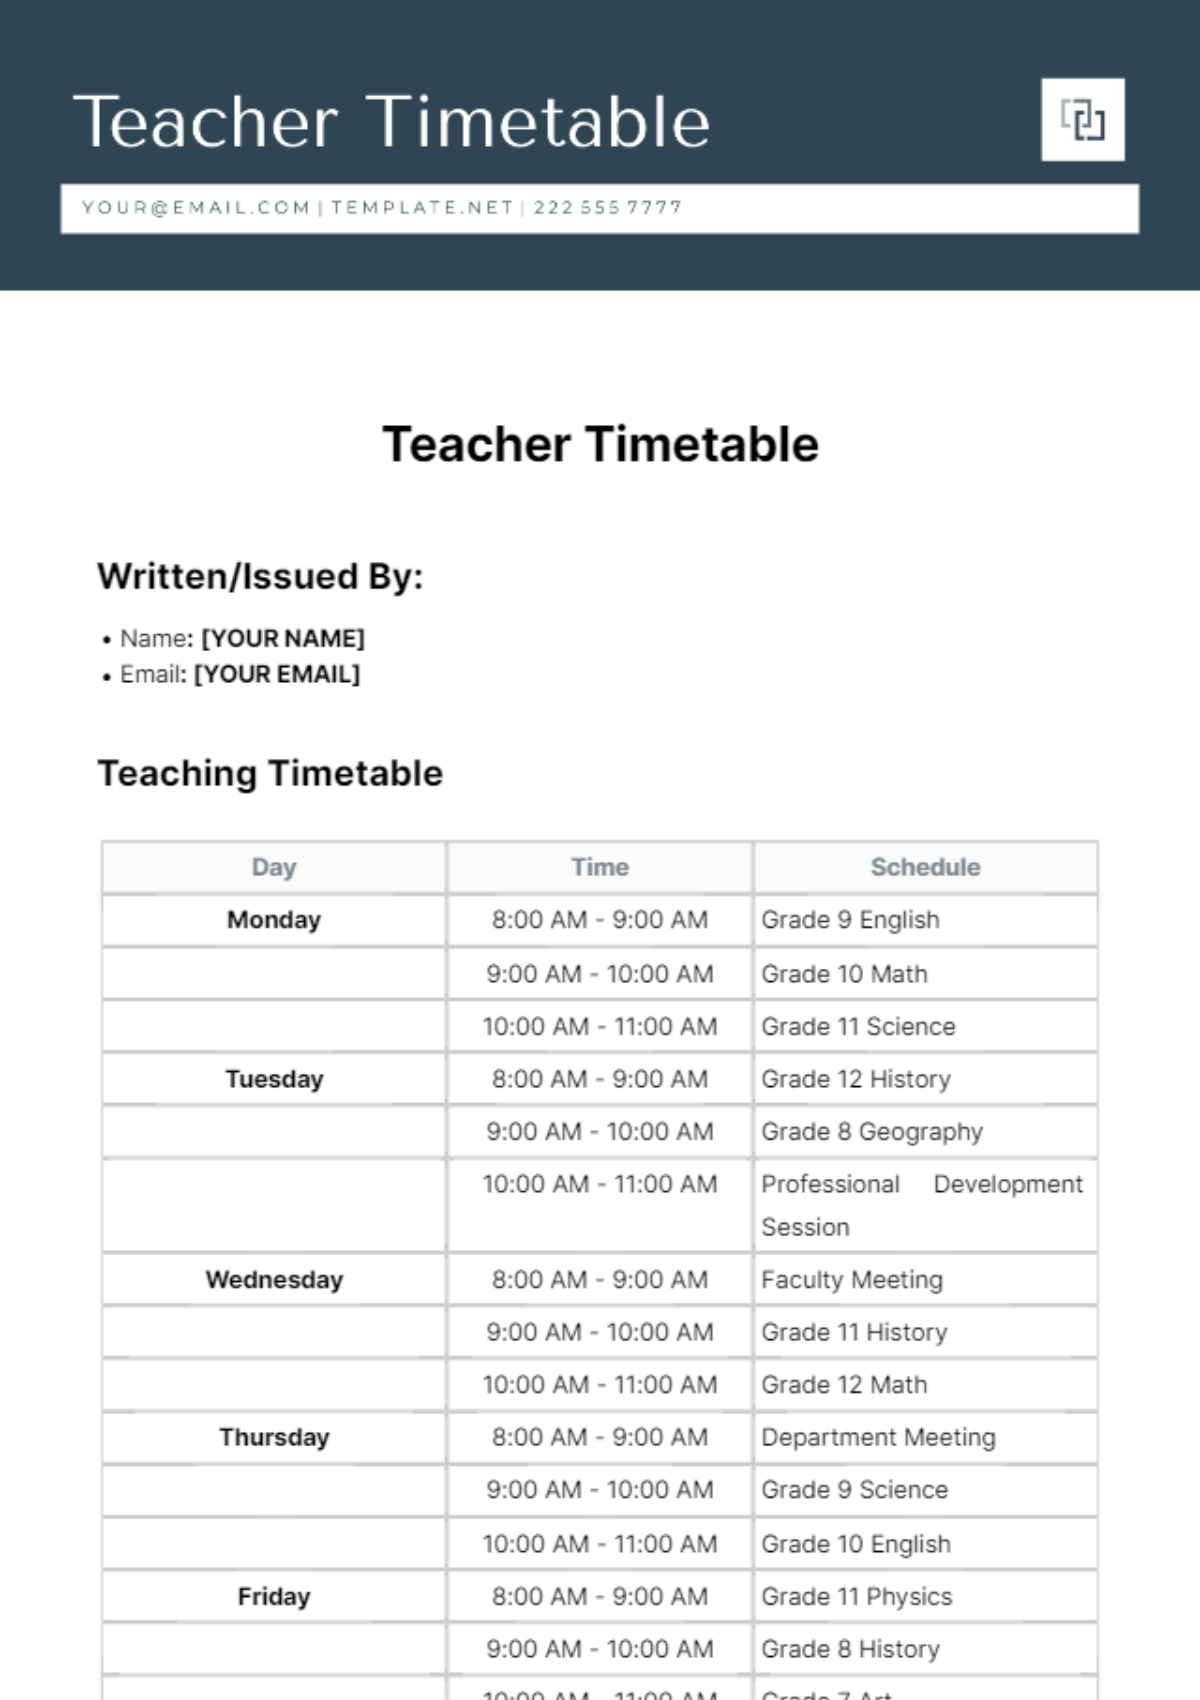 Teacher Timetable Template